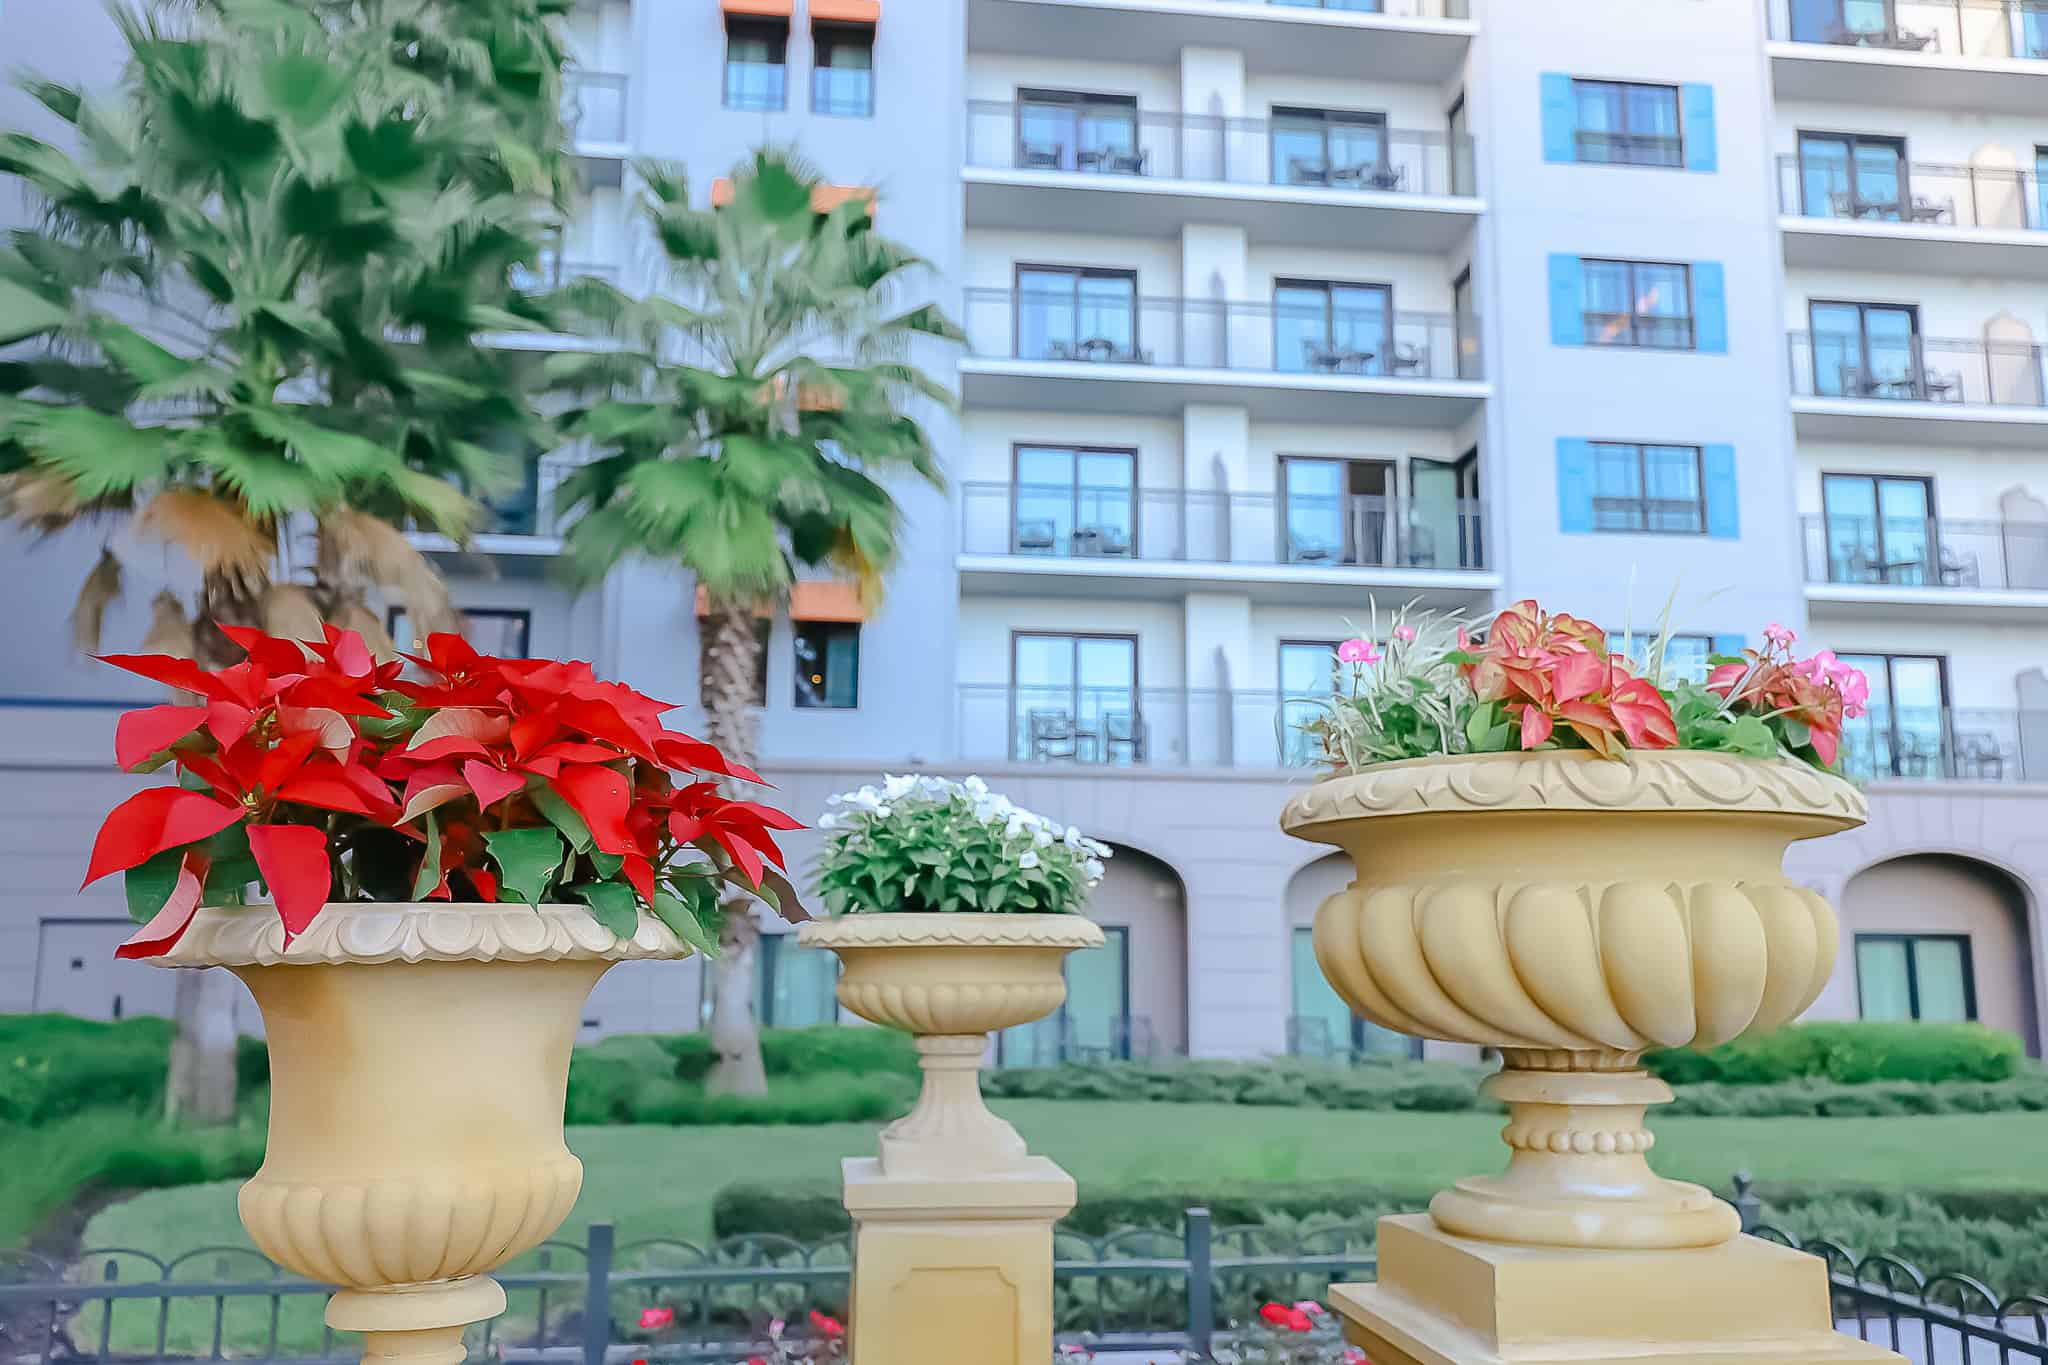 Christmas plants near the entrance of Disney's Riviera Resort